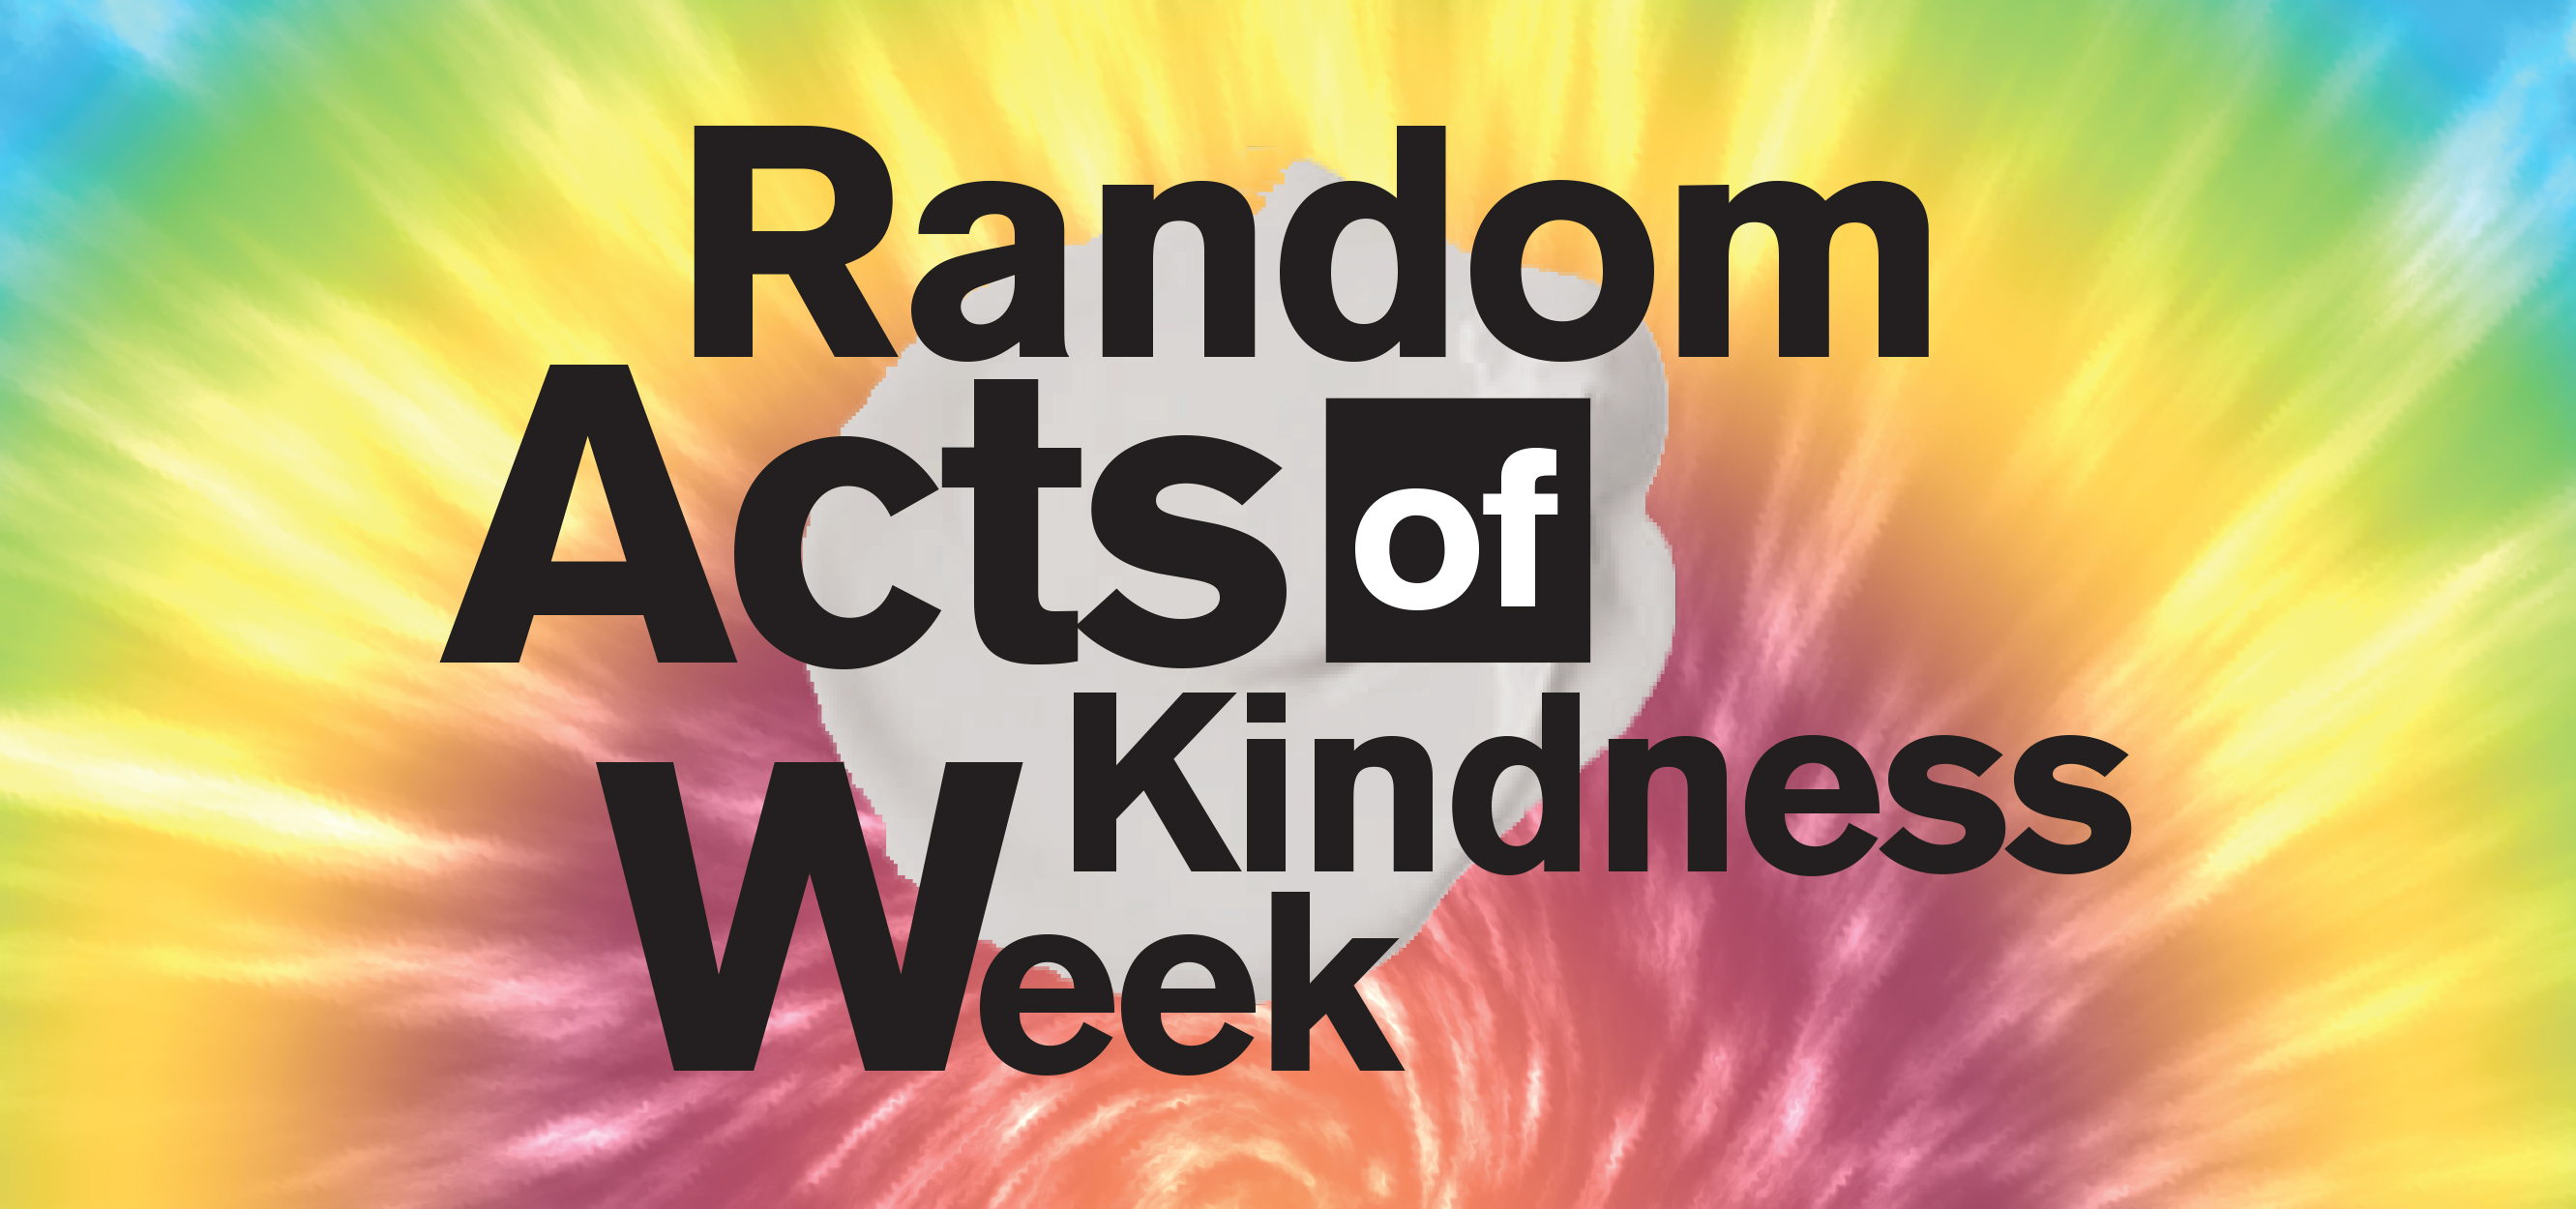 Random Acts of Kindness Week ASU Events